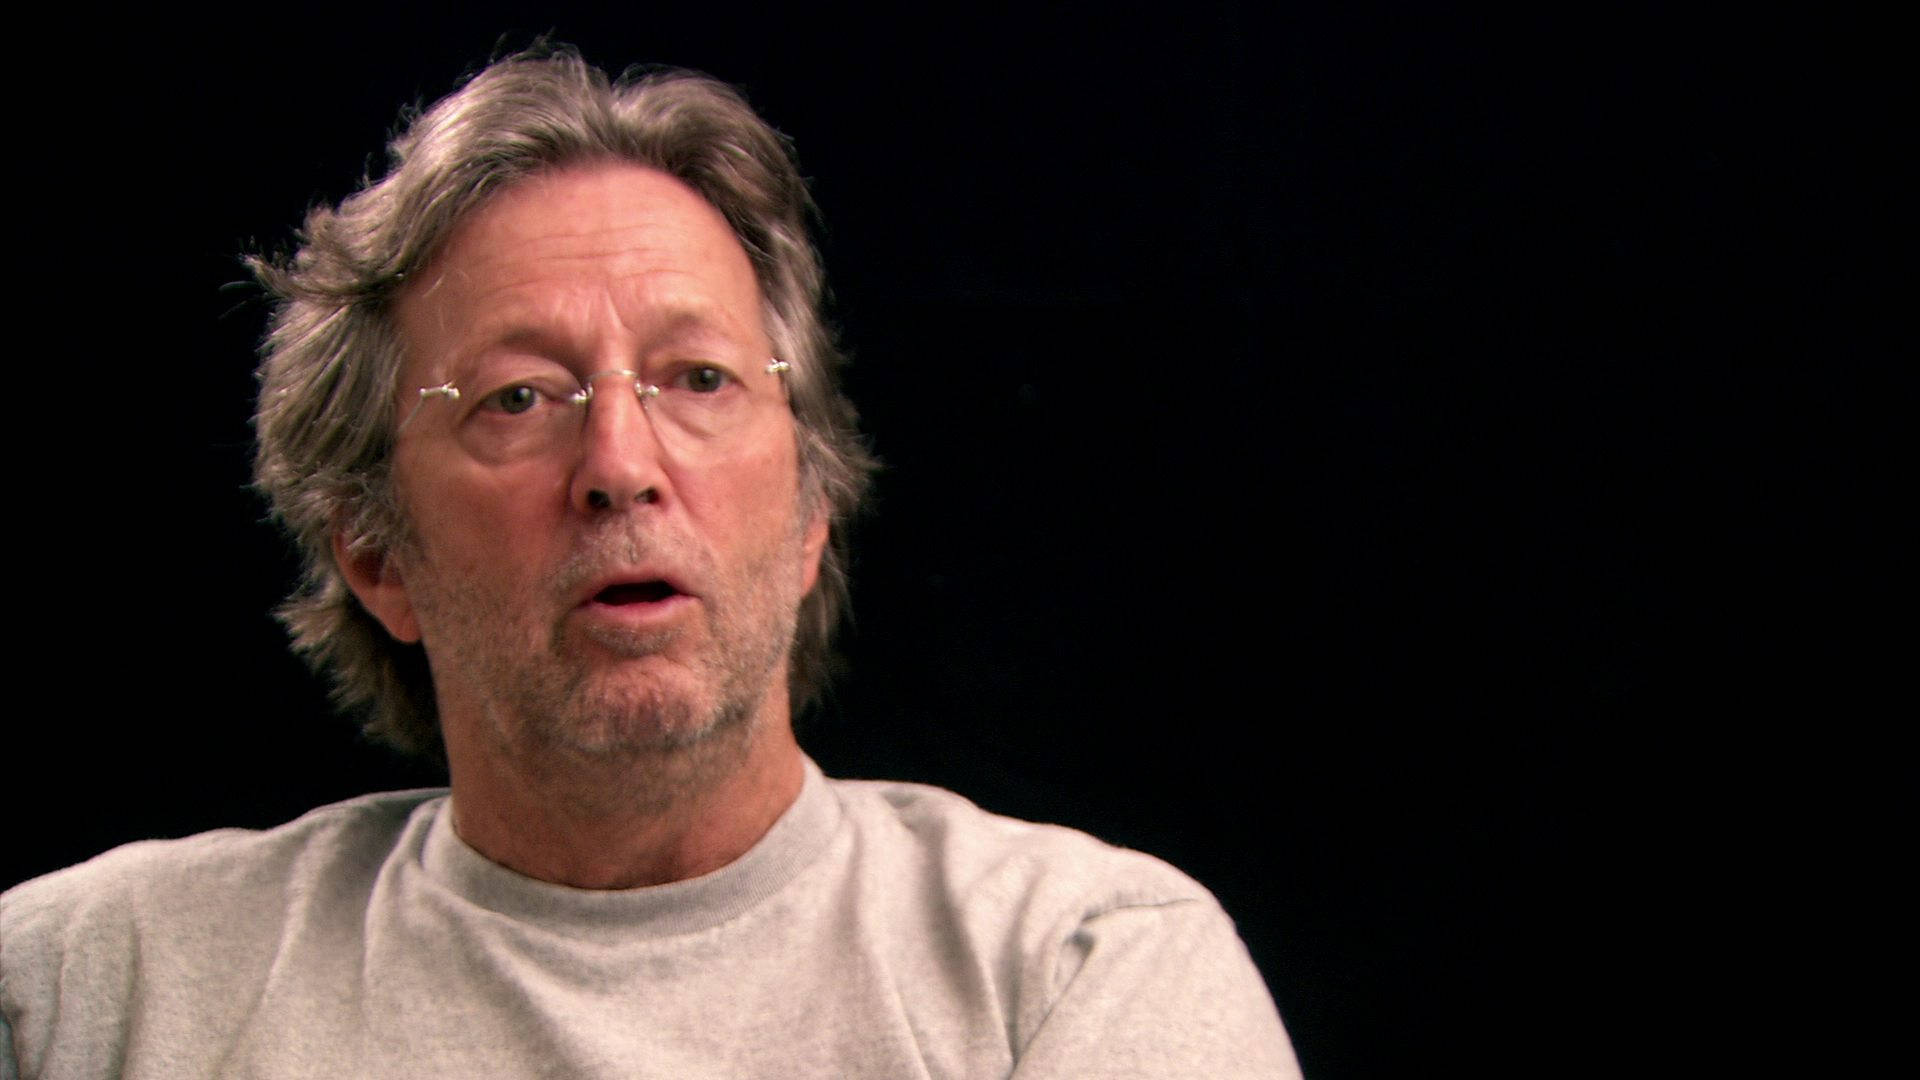 Eric Clapton Simple Interview Wallpaper